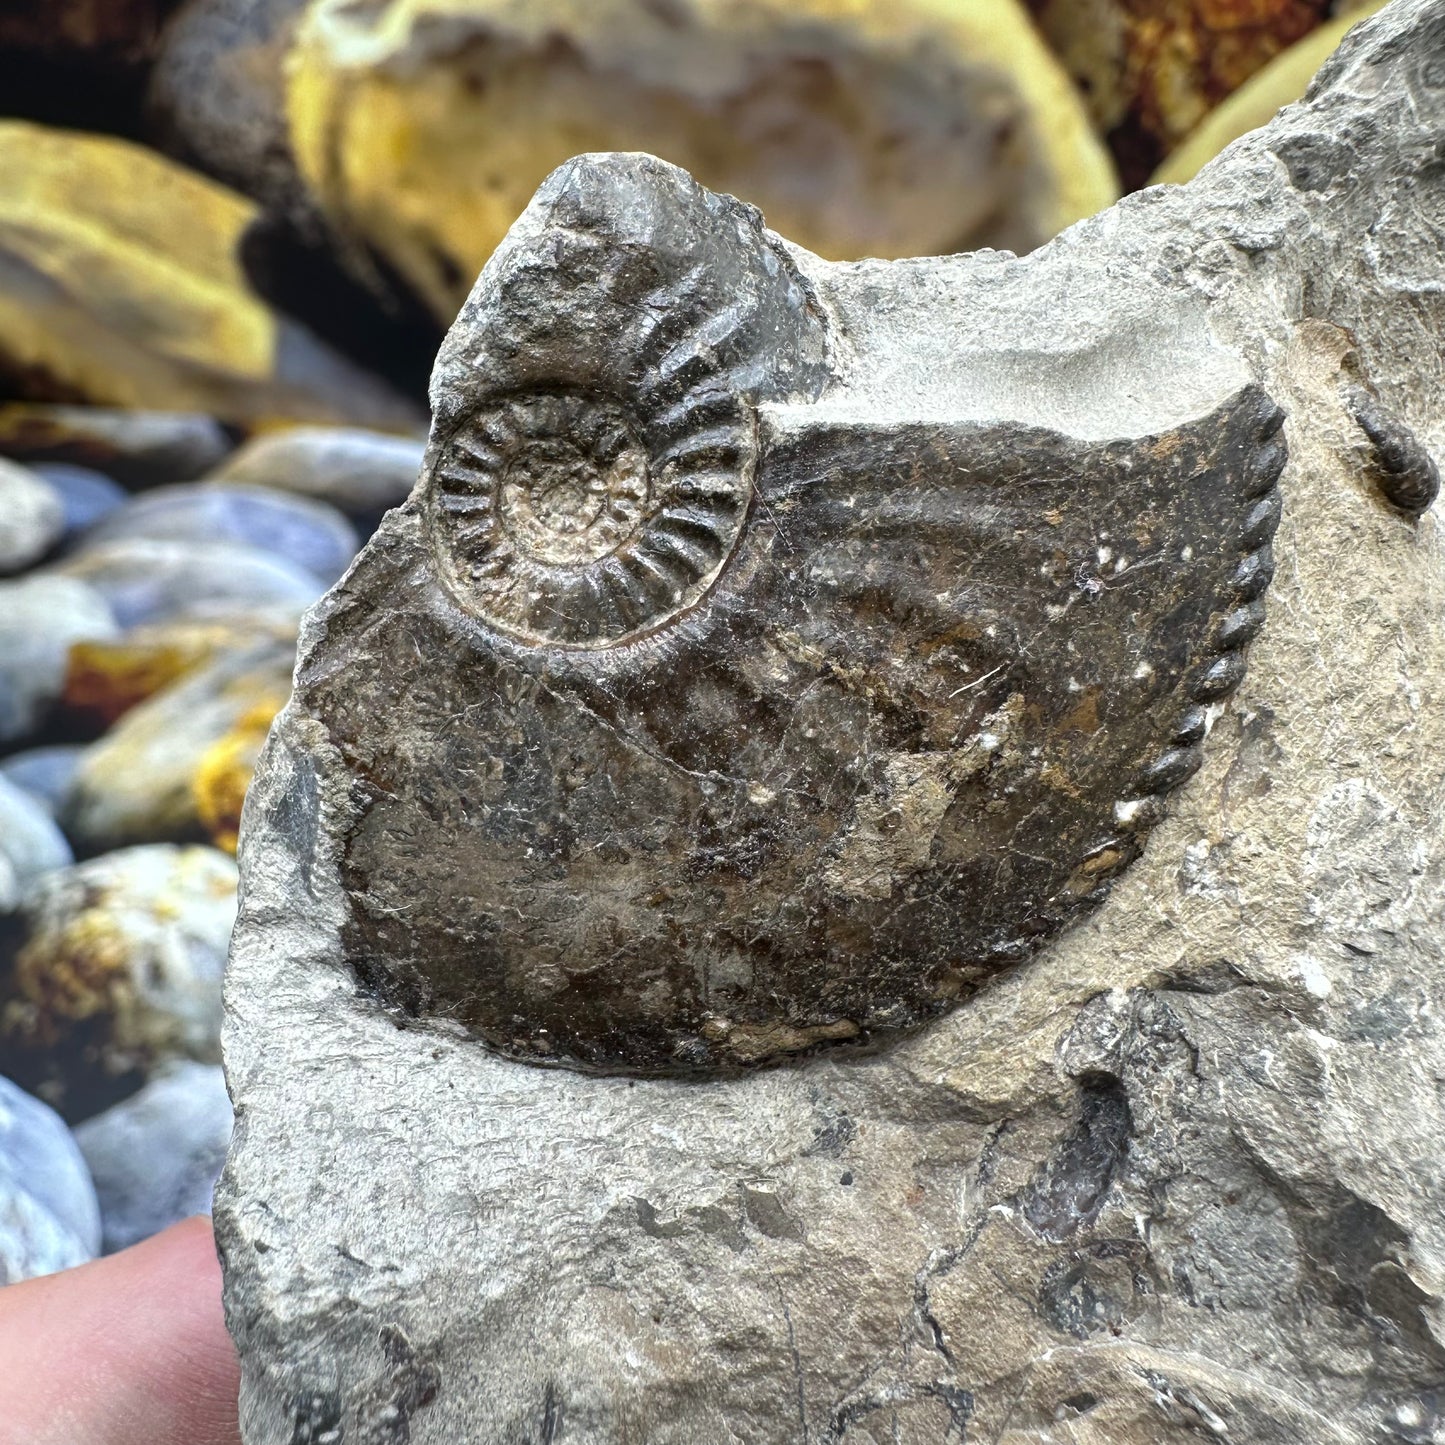 Amaltheus subnodosus ammonite fossil - Whitby, North Yorkshire Jurassic Coast, Yorkshire Fossils